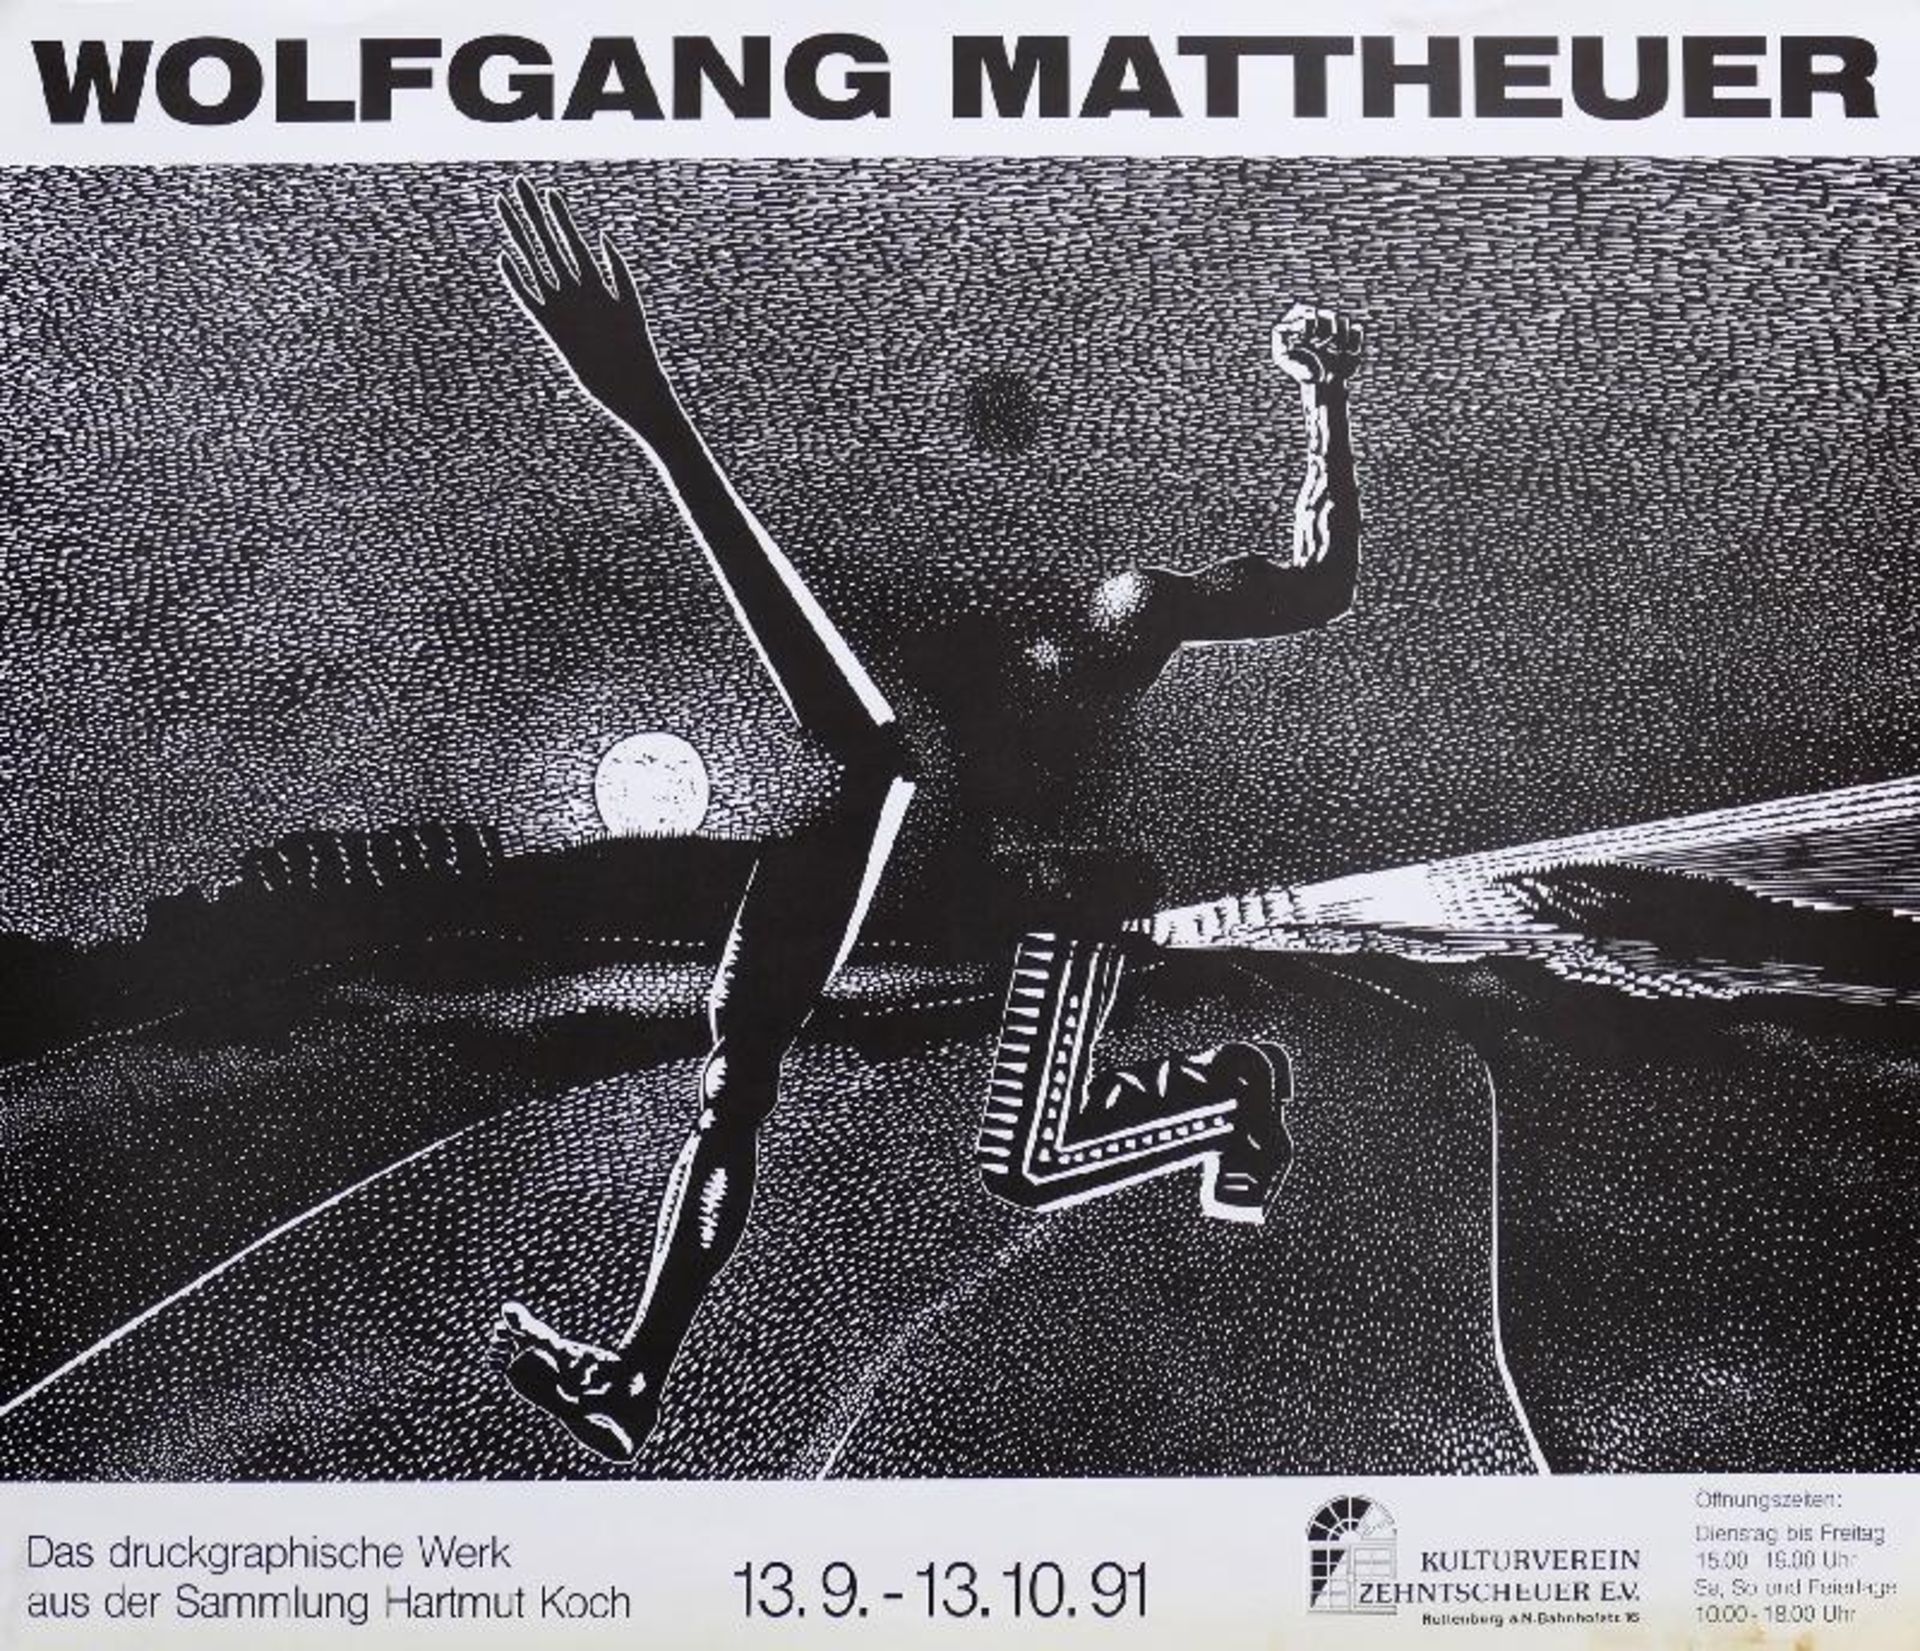 Mattheuer, Wolfgang - Hinter den sieben Bergen - Image 3 of 6